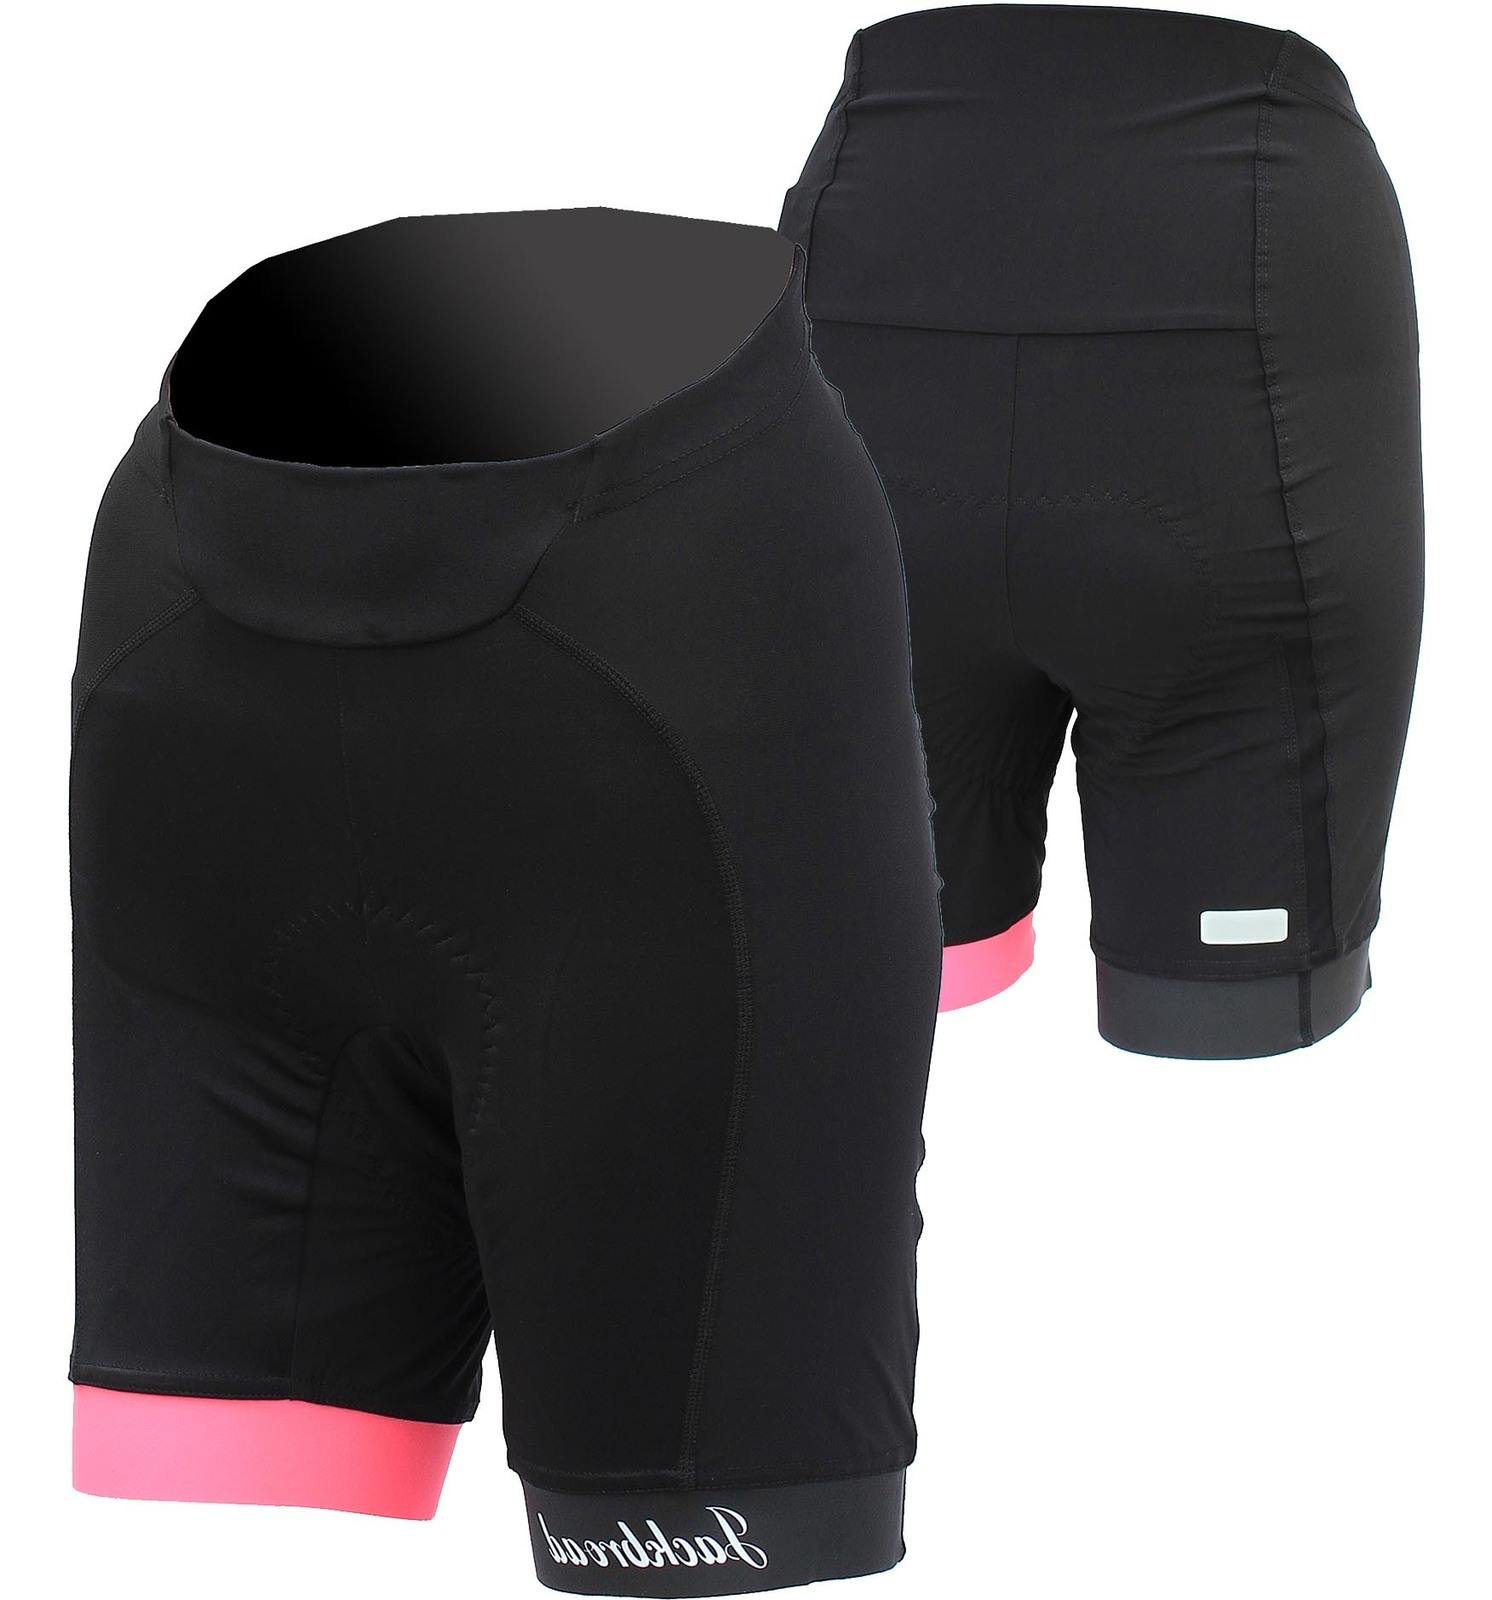 Jackbroad Premium Quality Cycling Padded Shorts Black Pink Medium